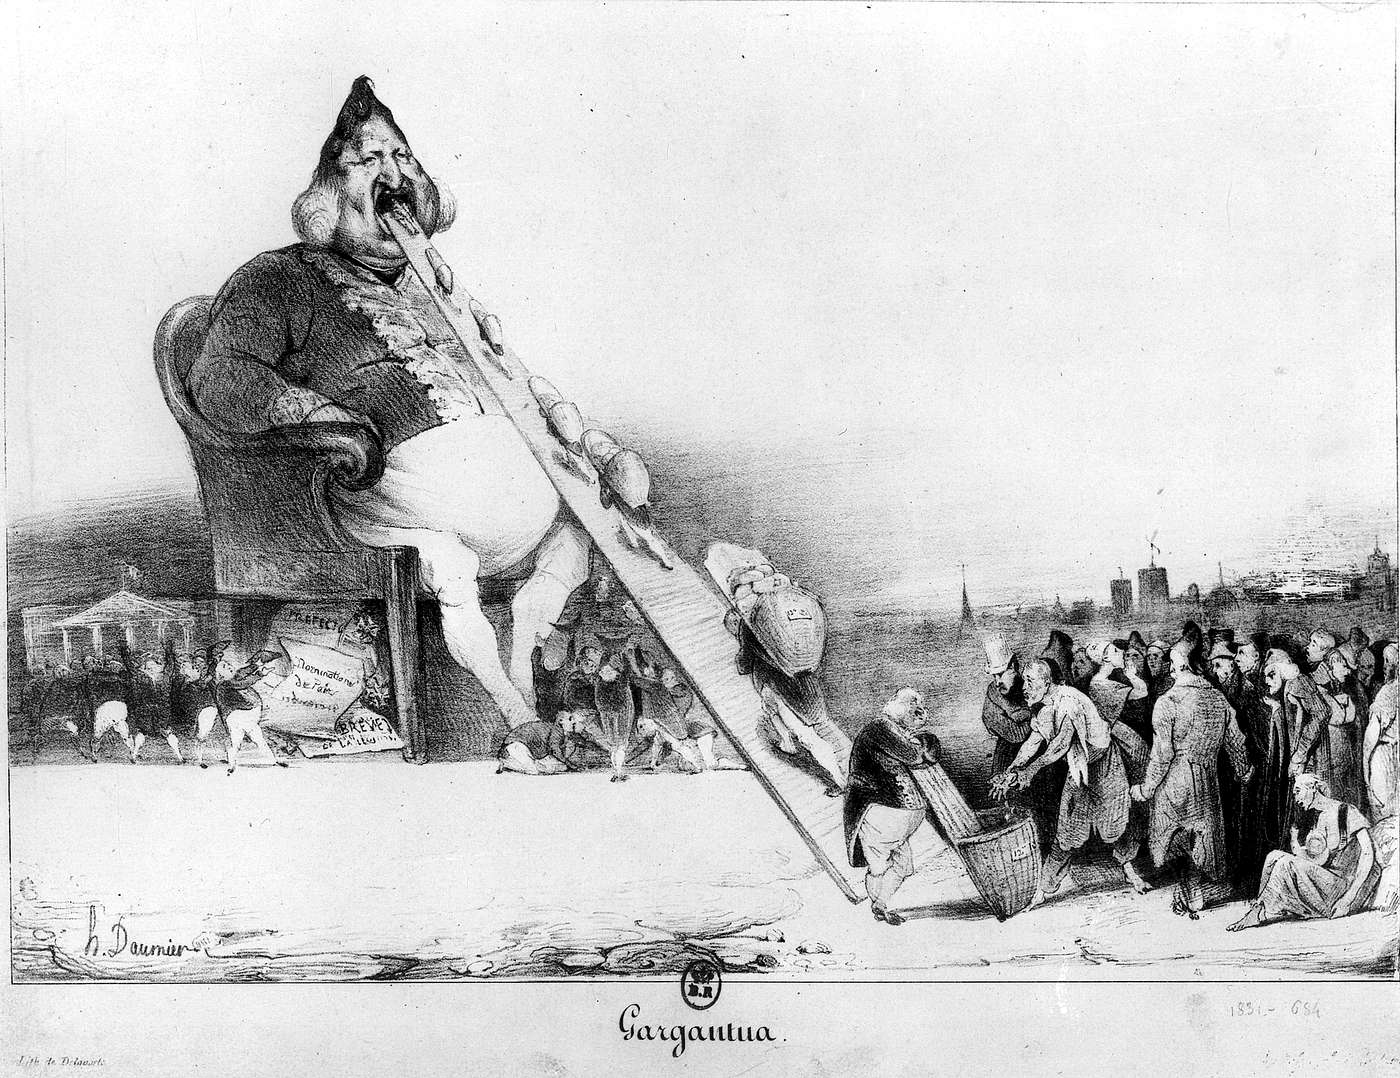 http://files.libertyfund.org/img/Daumier_Gargantua1400.jpg